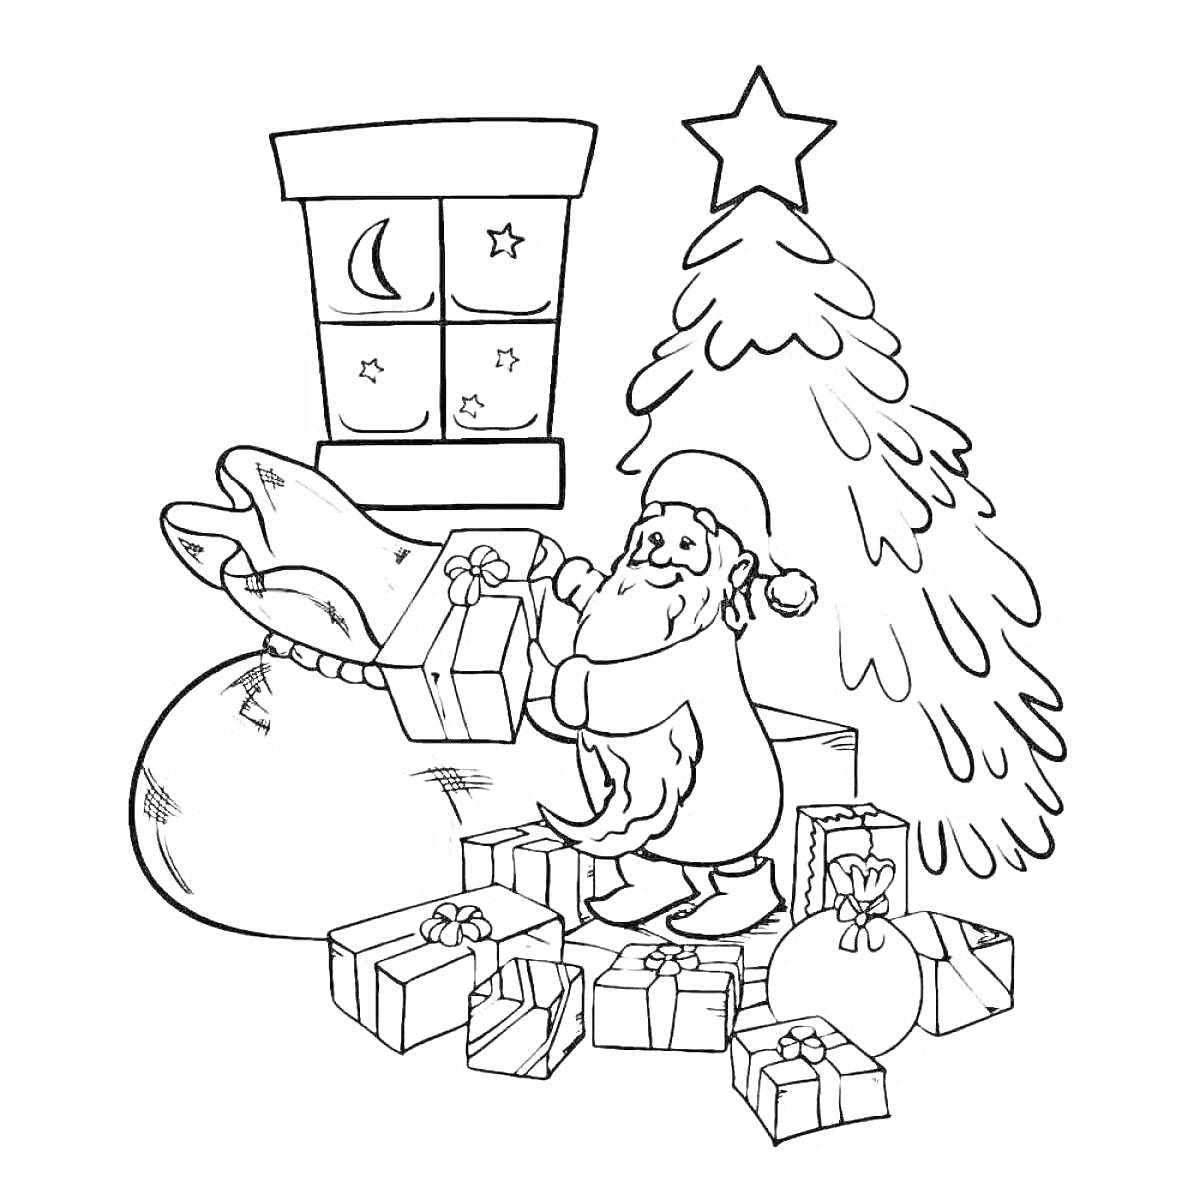 Раскраска Дед Мороз раздает подарки около елочки и окна